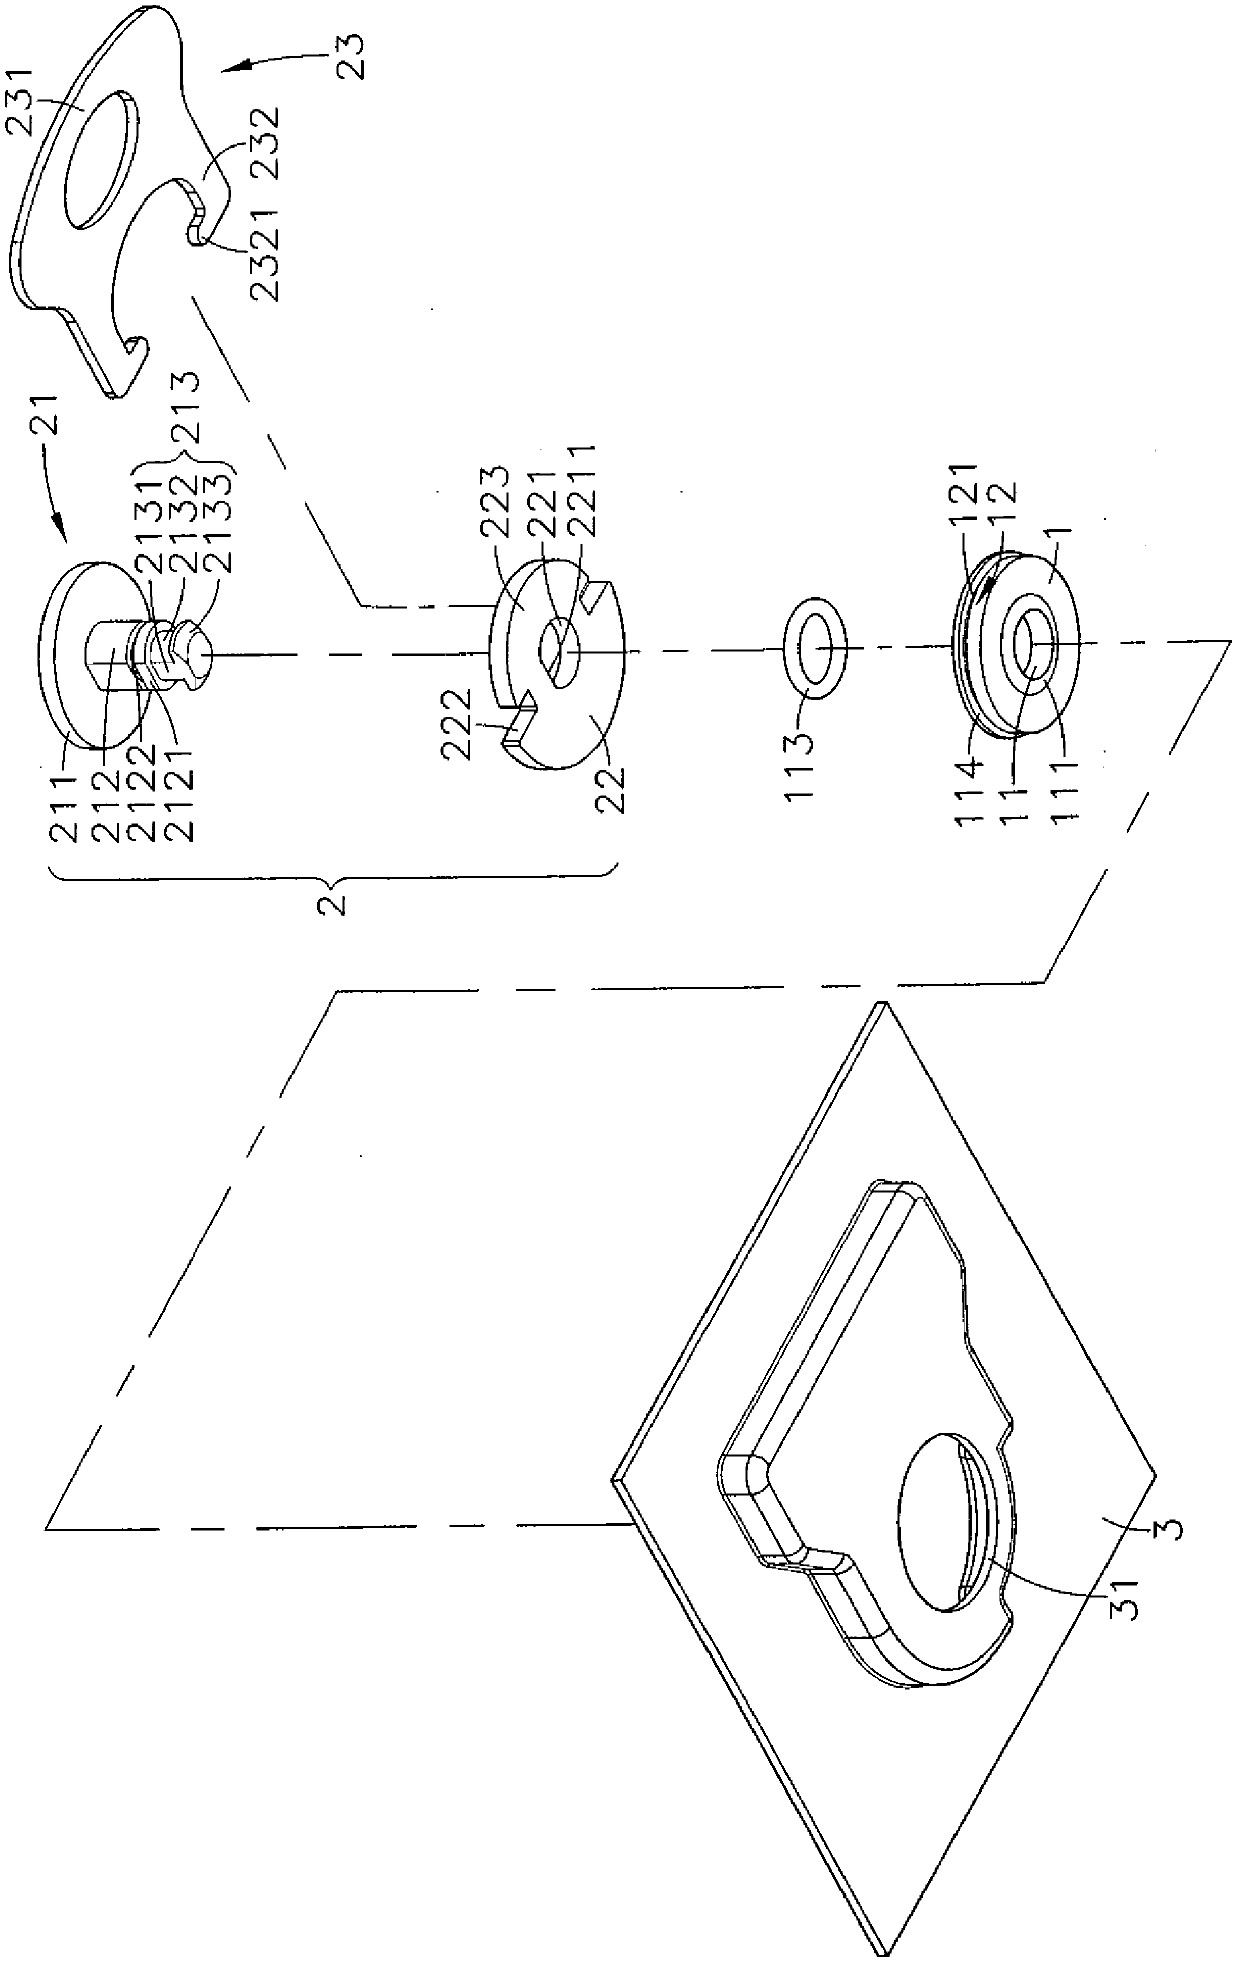 BTB (board to board) rotary fastening device